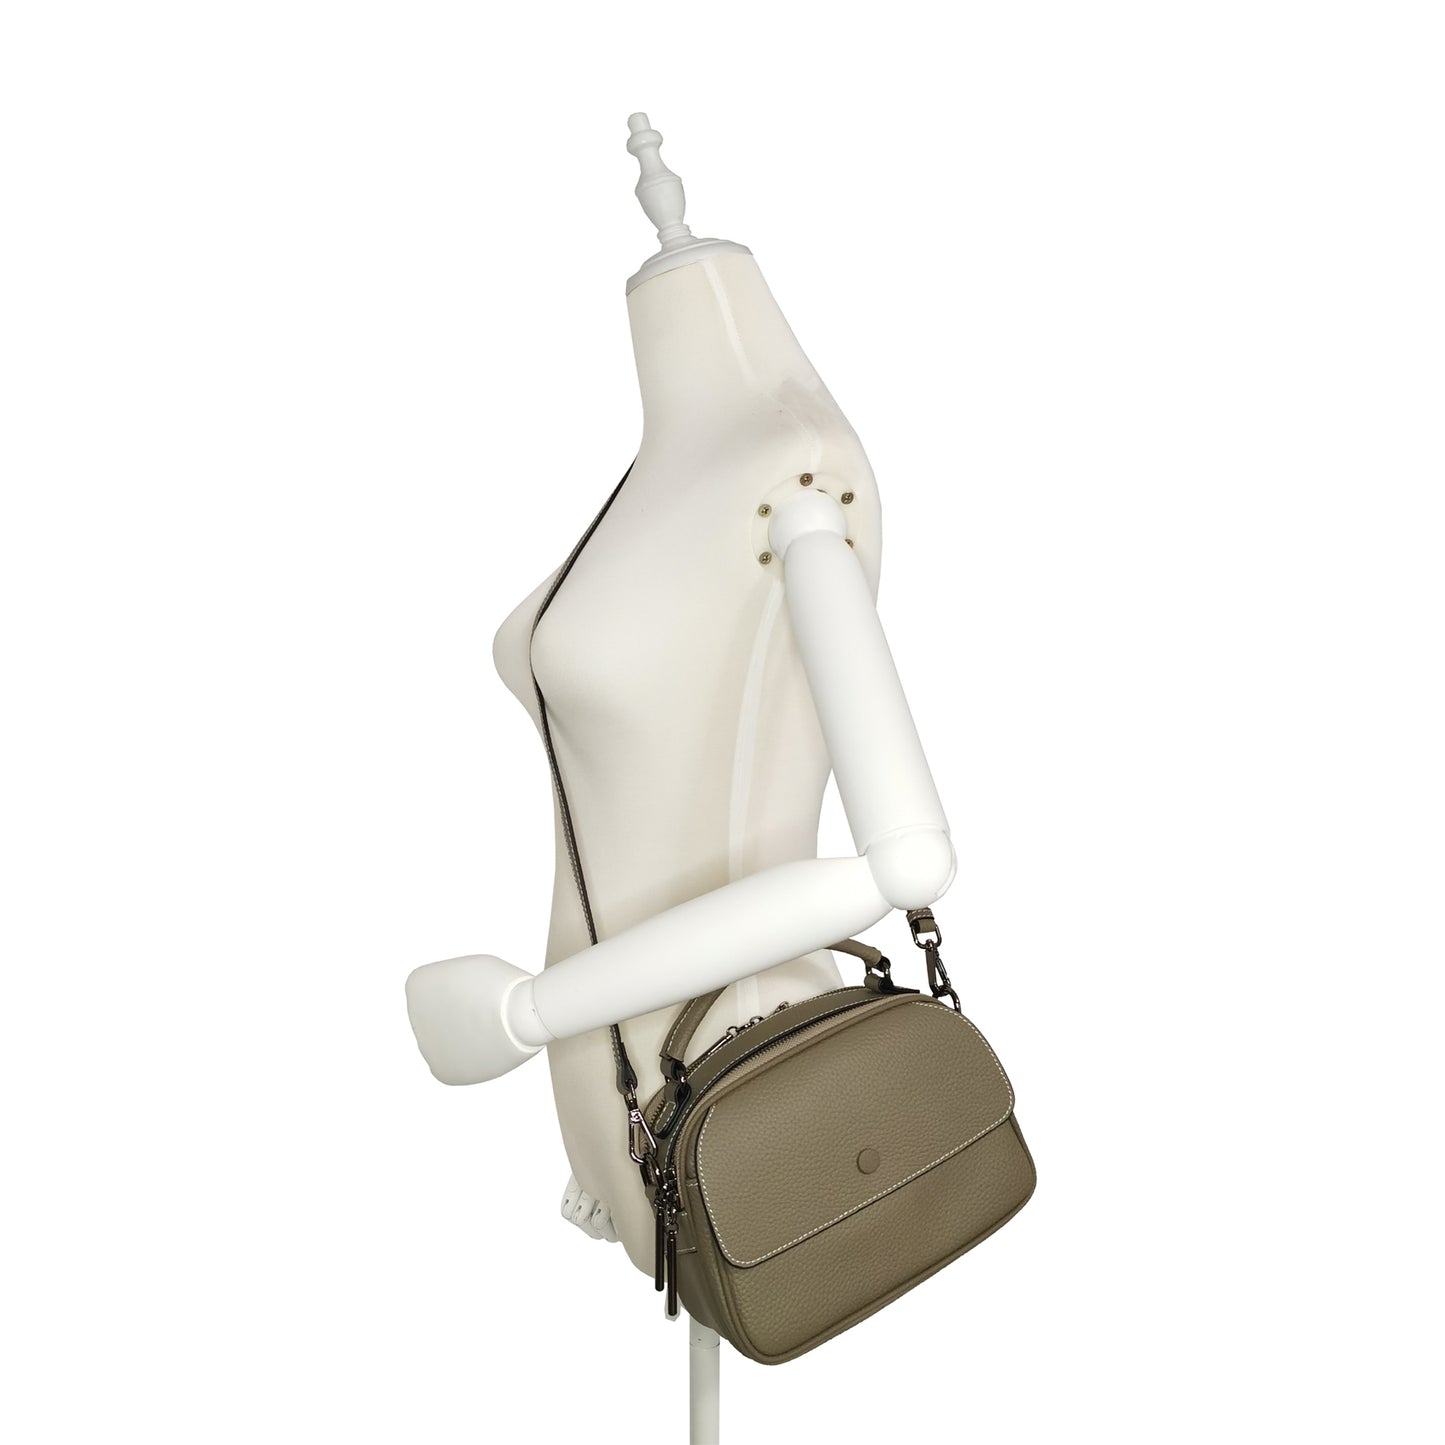 Women's genuine cowhide leather handbag Demi design with 2 straps